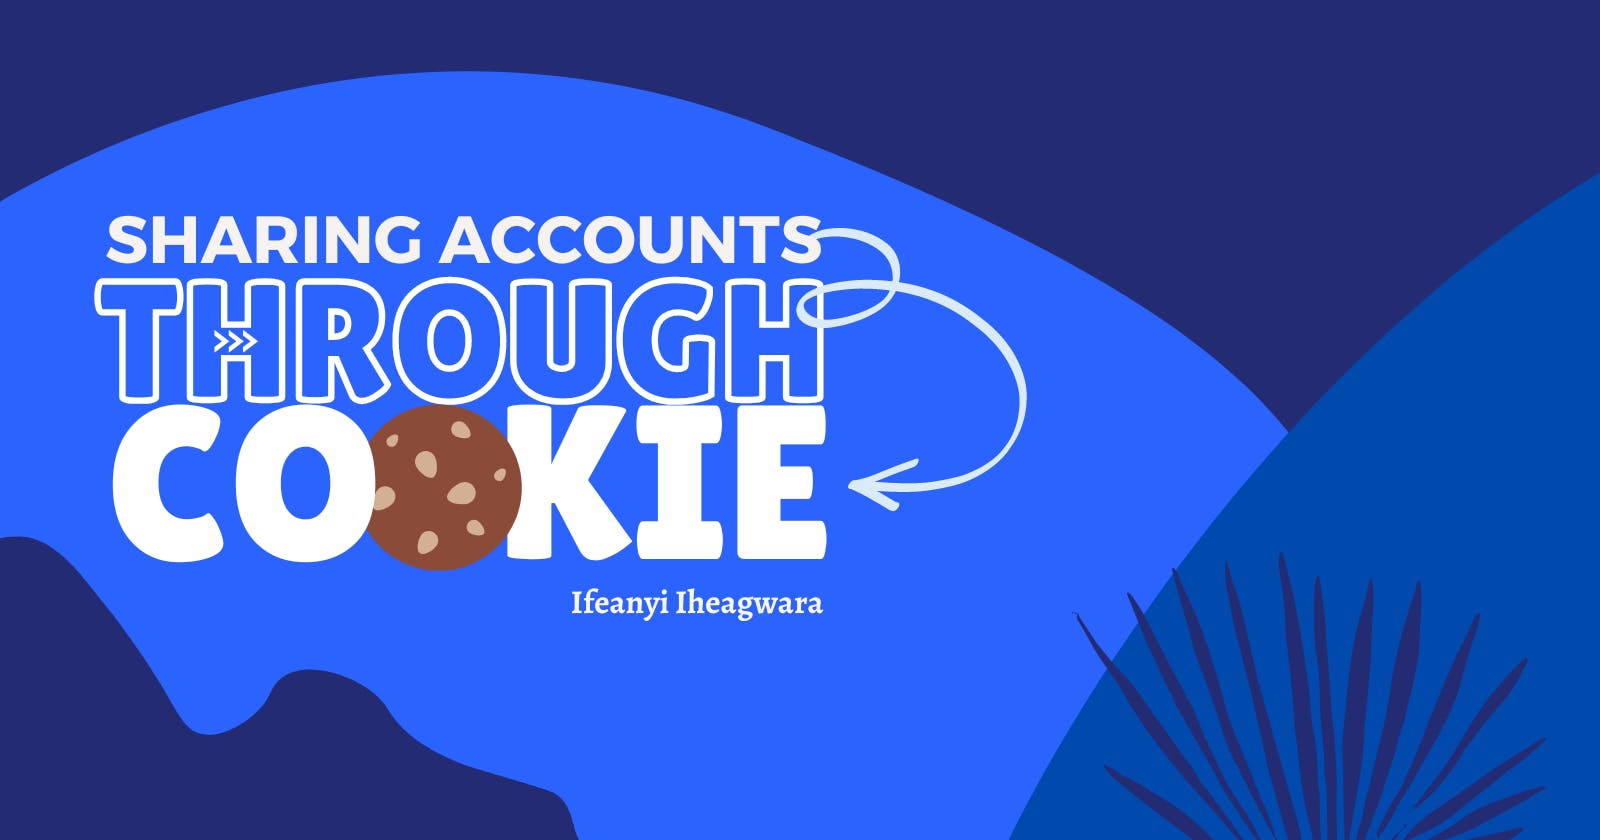 Sharing Accounts Through Cookies